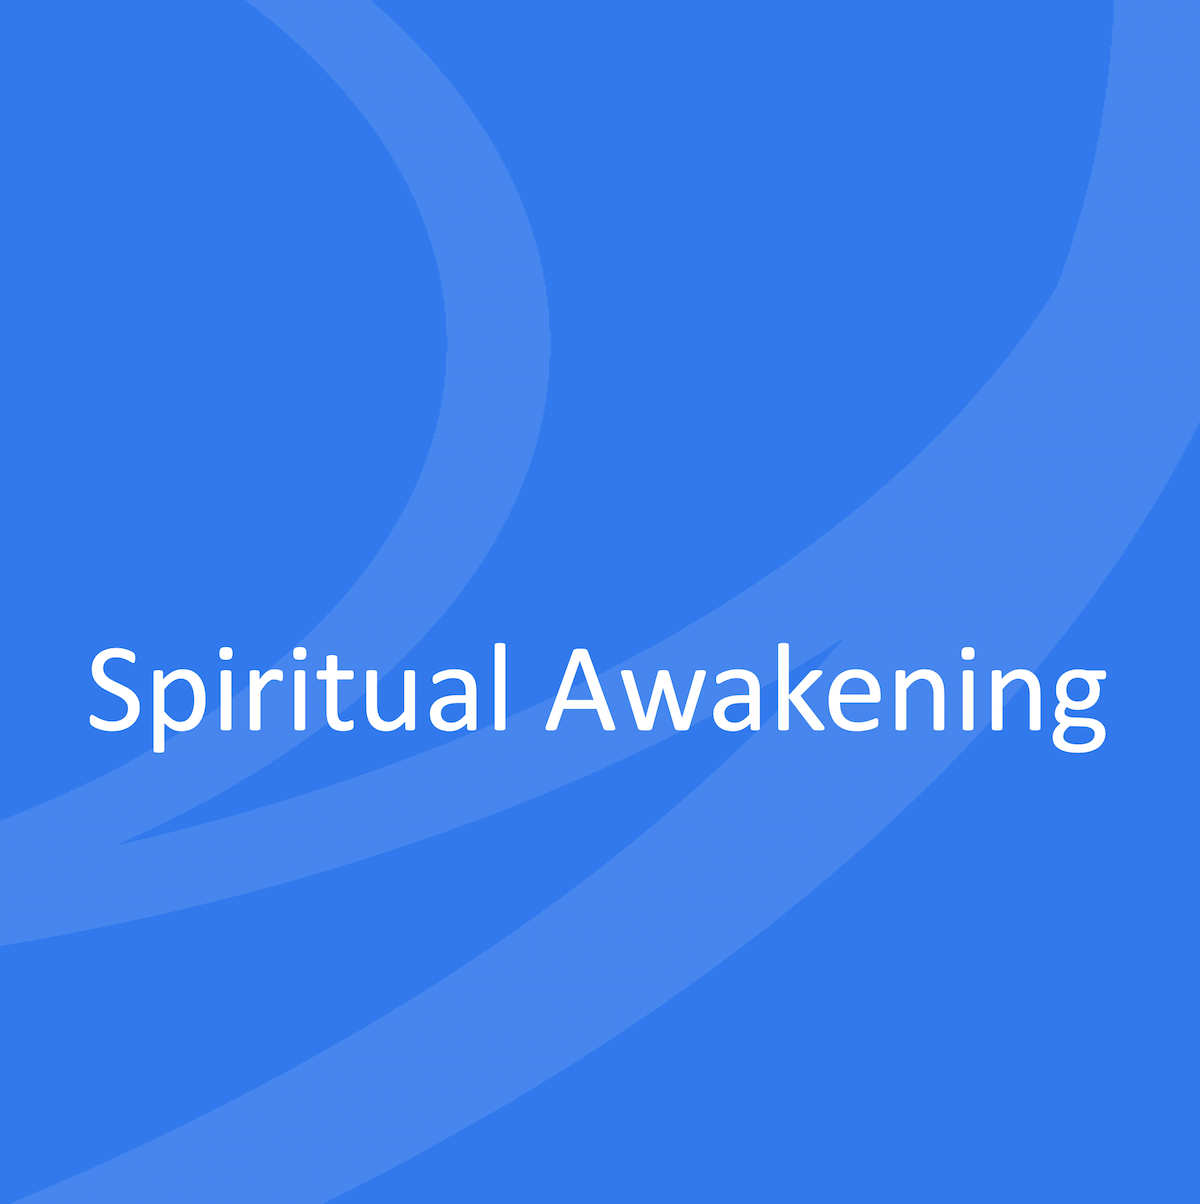 Spirituele ontwaking | Alles over spiritualiteit | Lead a normal life https://leadanormallife.com